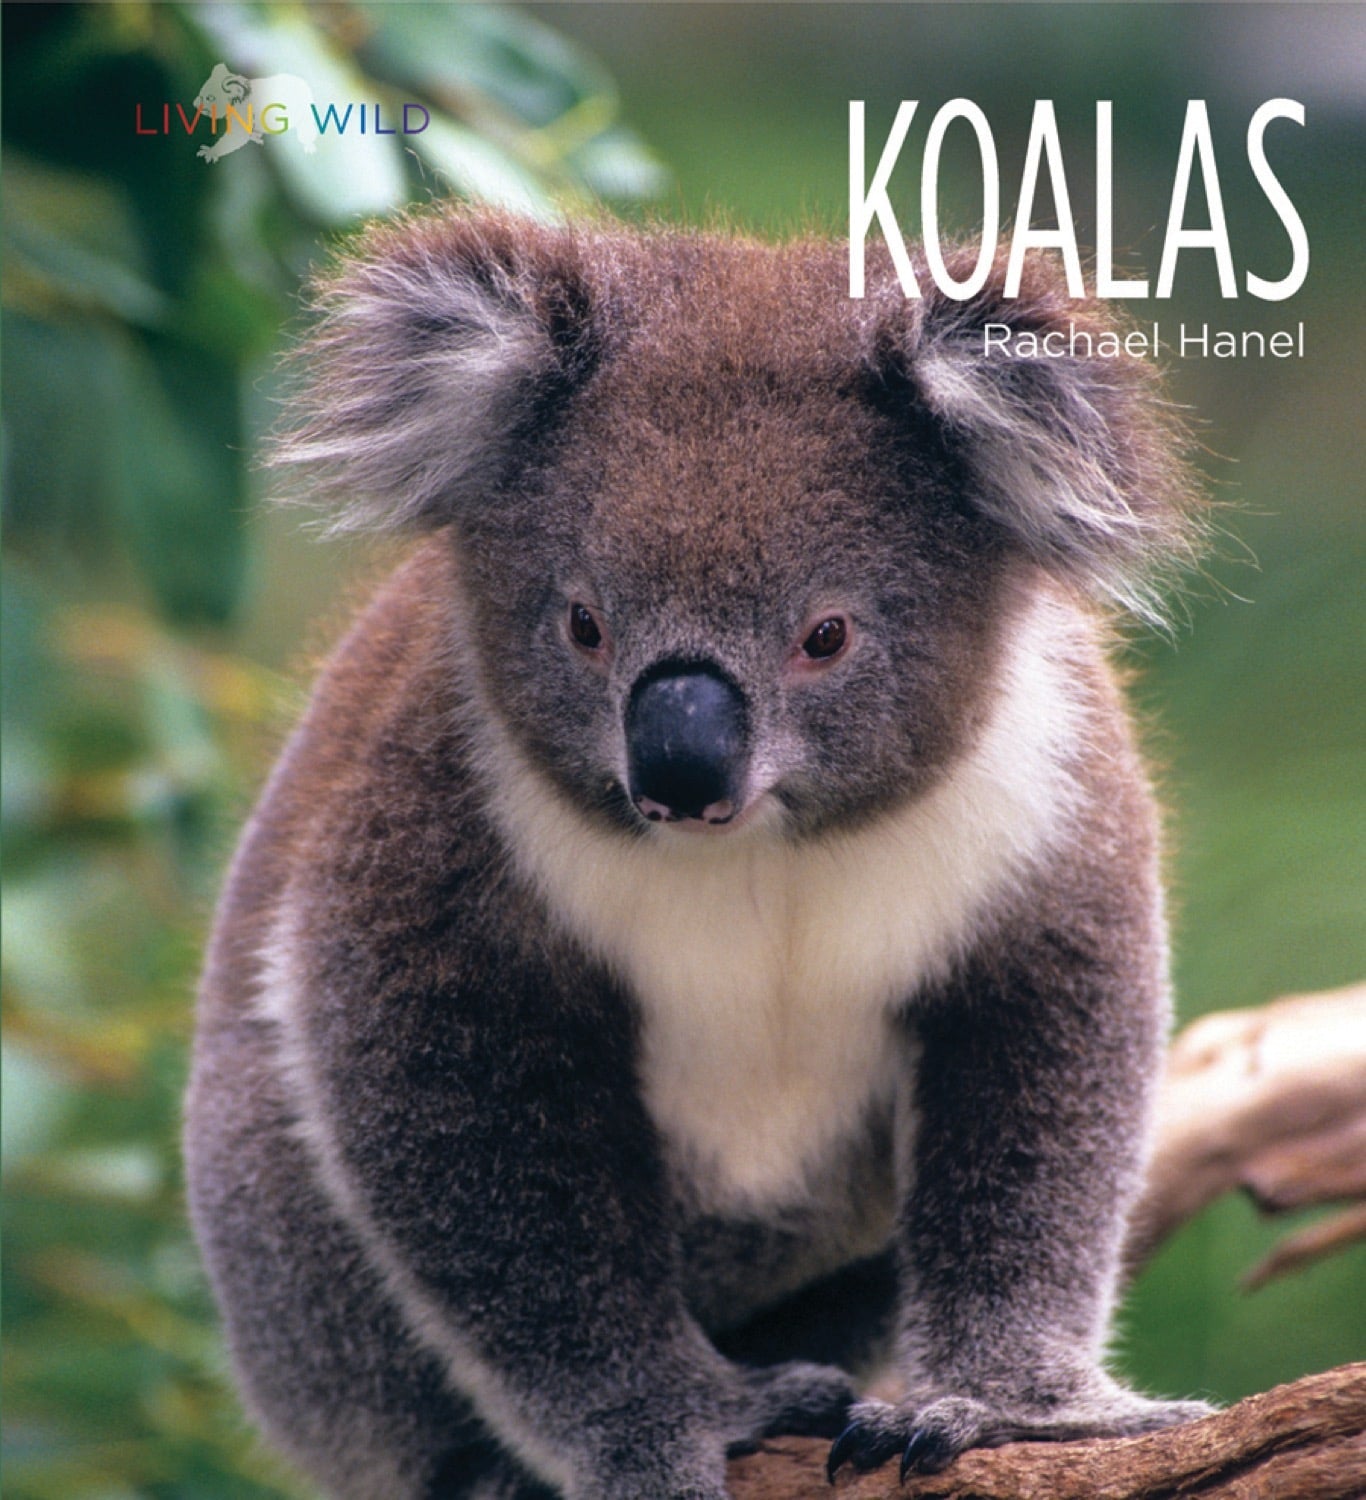 Living Wild - Classic Edition: Koalas